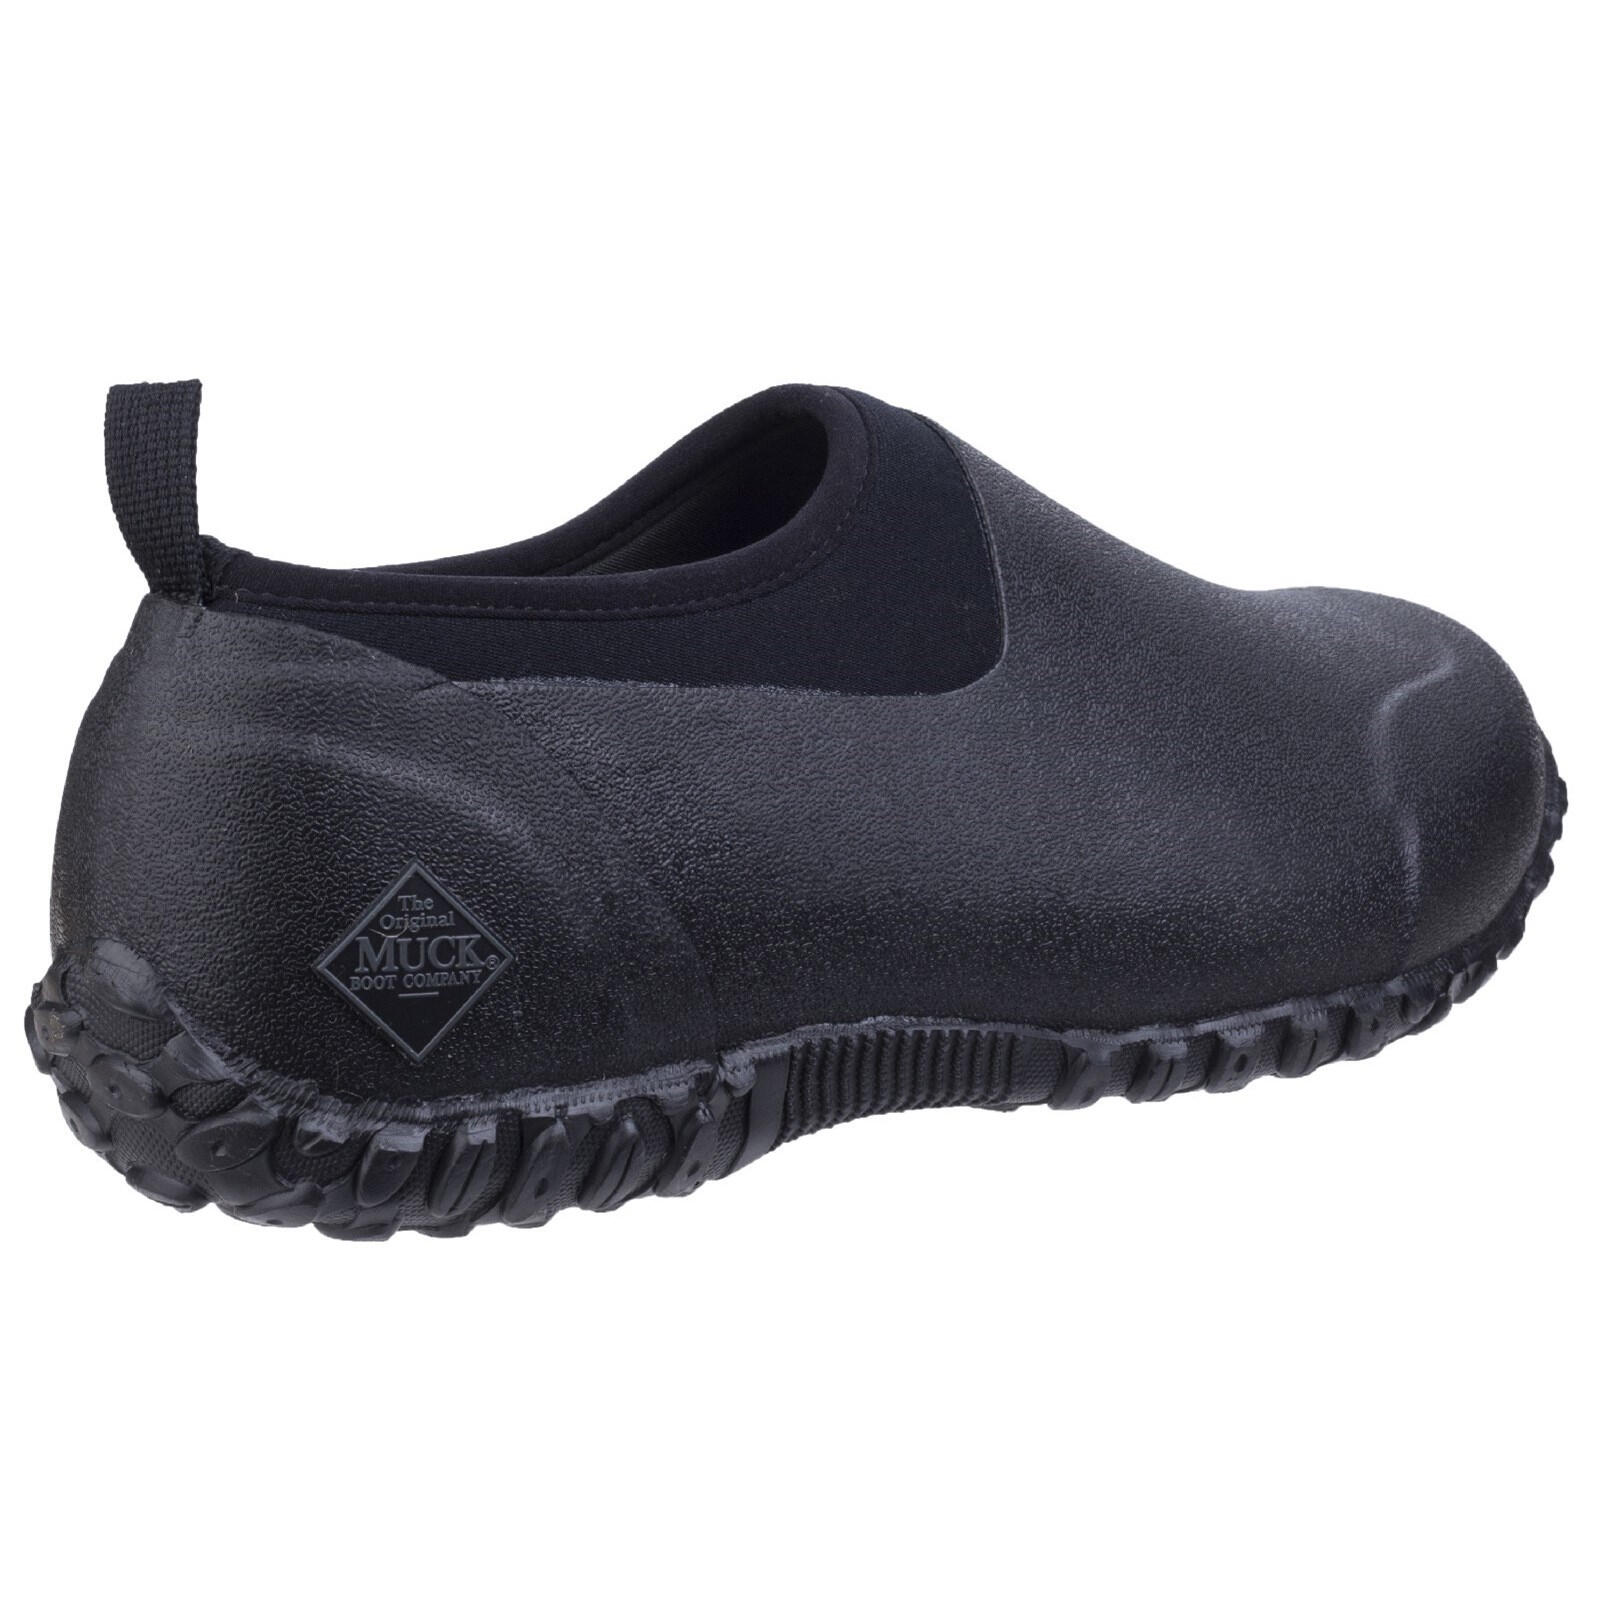 Mens Muckster II Low All Purpose Lightweight Shoes (Black) 2/3